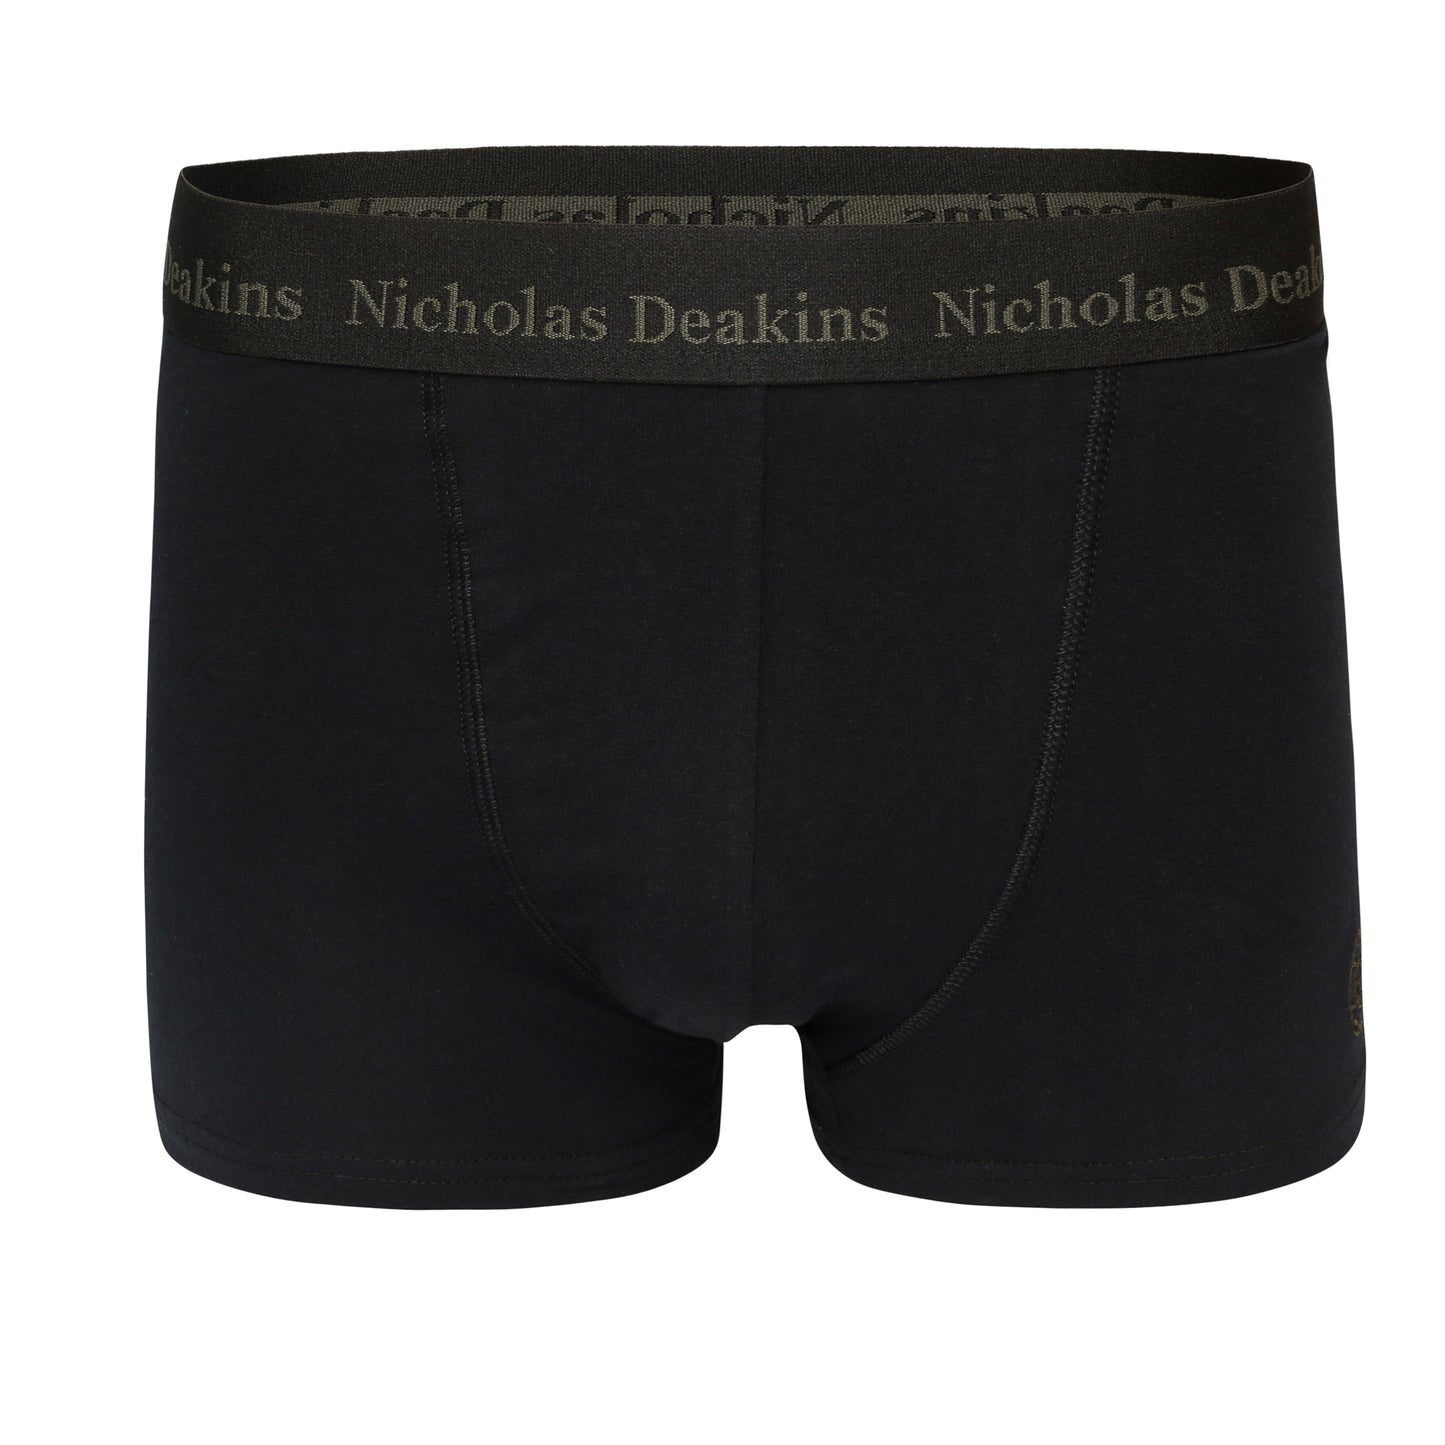 Nicholas Deakins Boxers Black & Grey 2pk